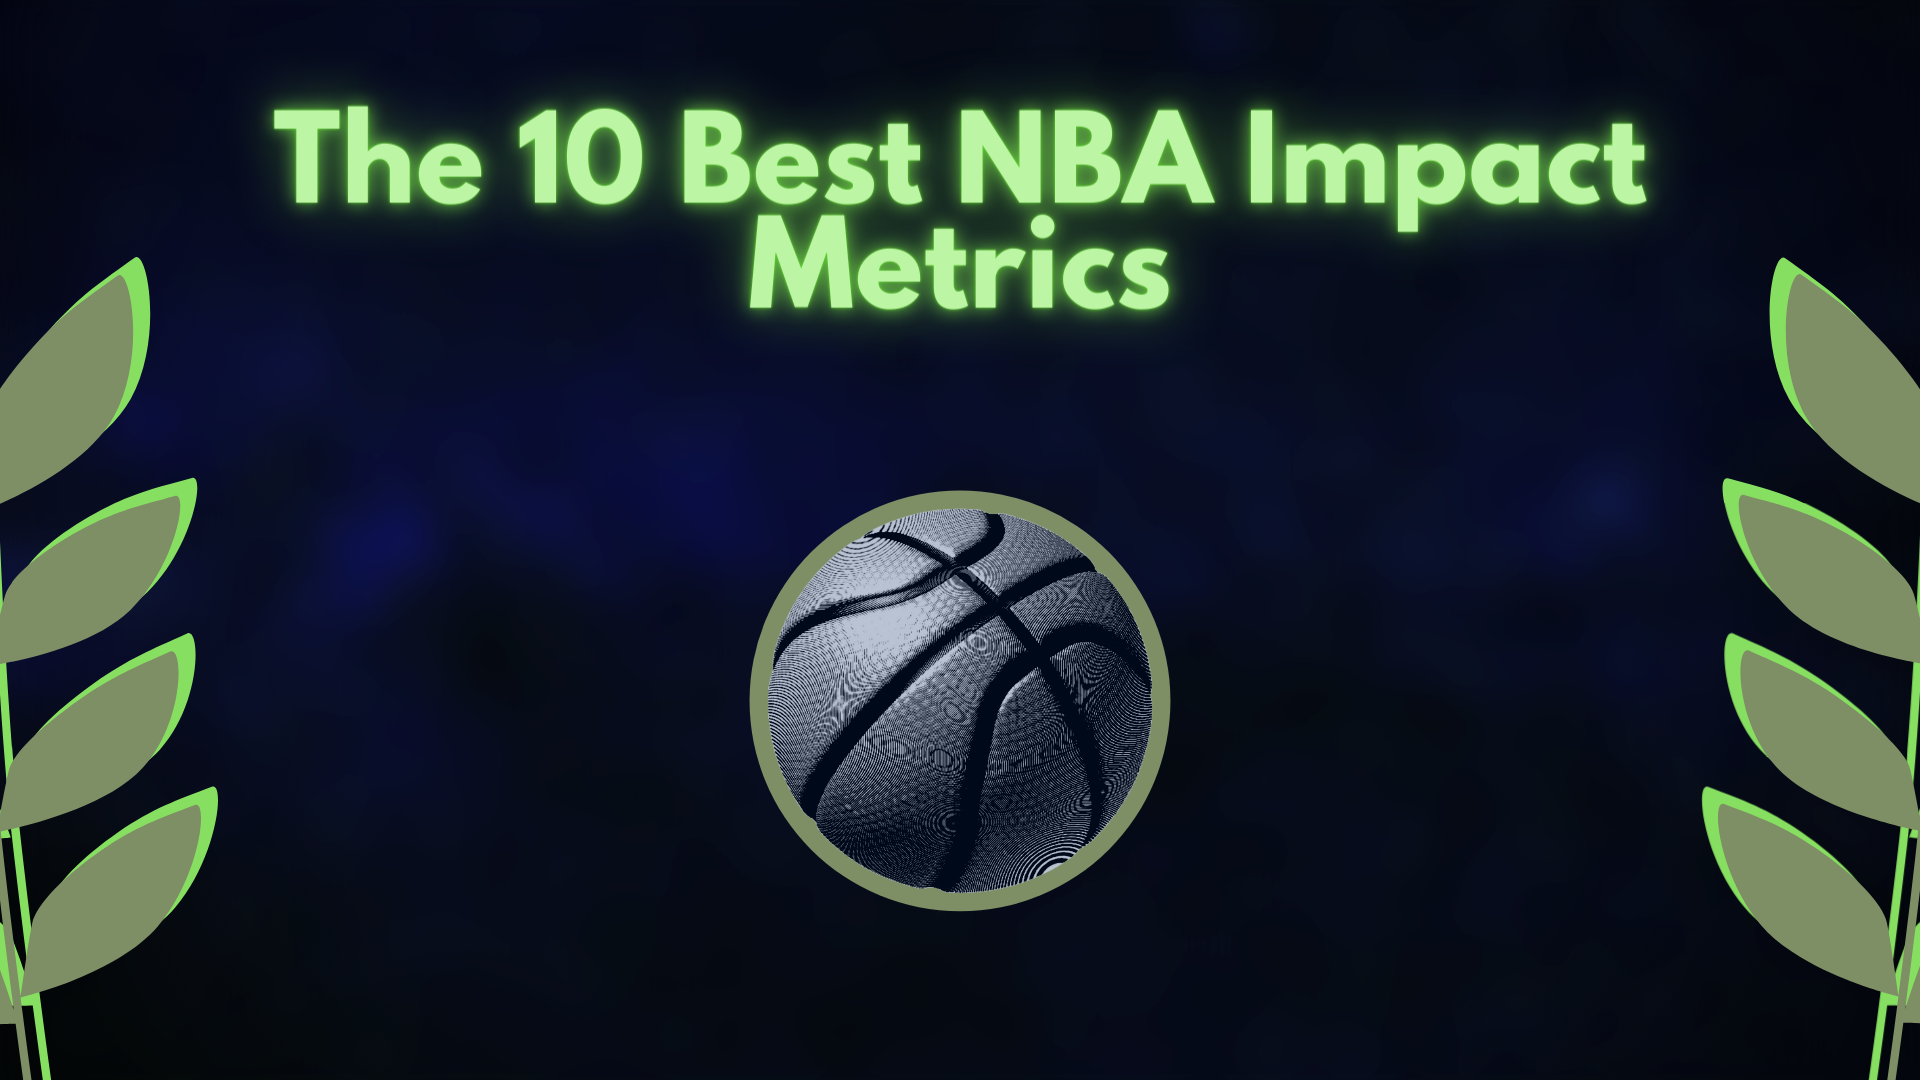 The 10 Best NBA Impact Metrics